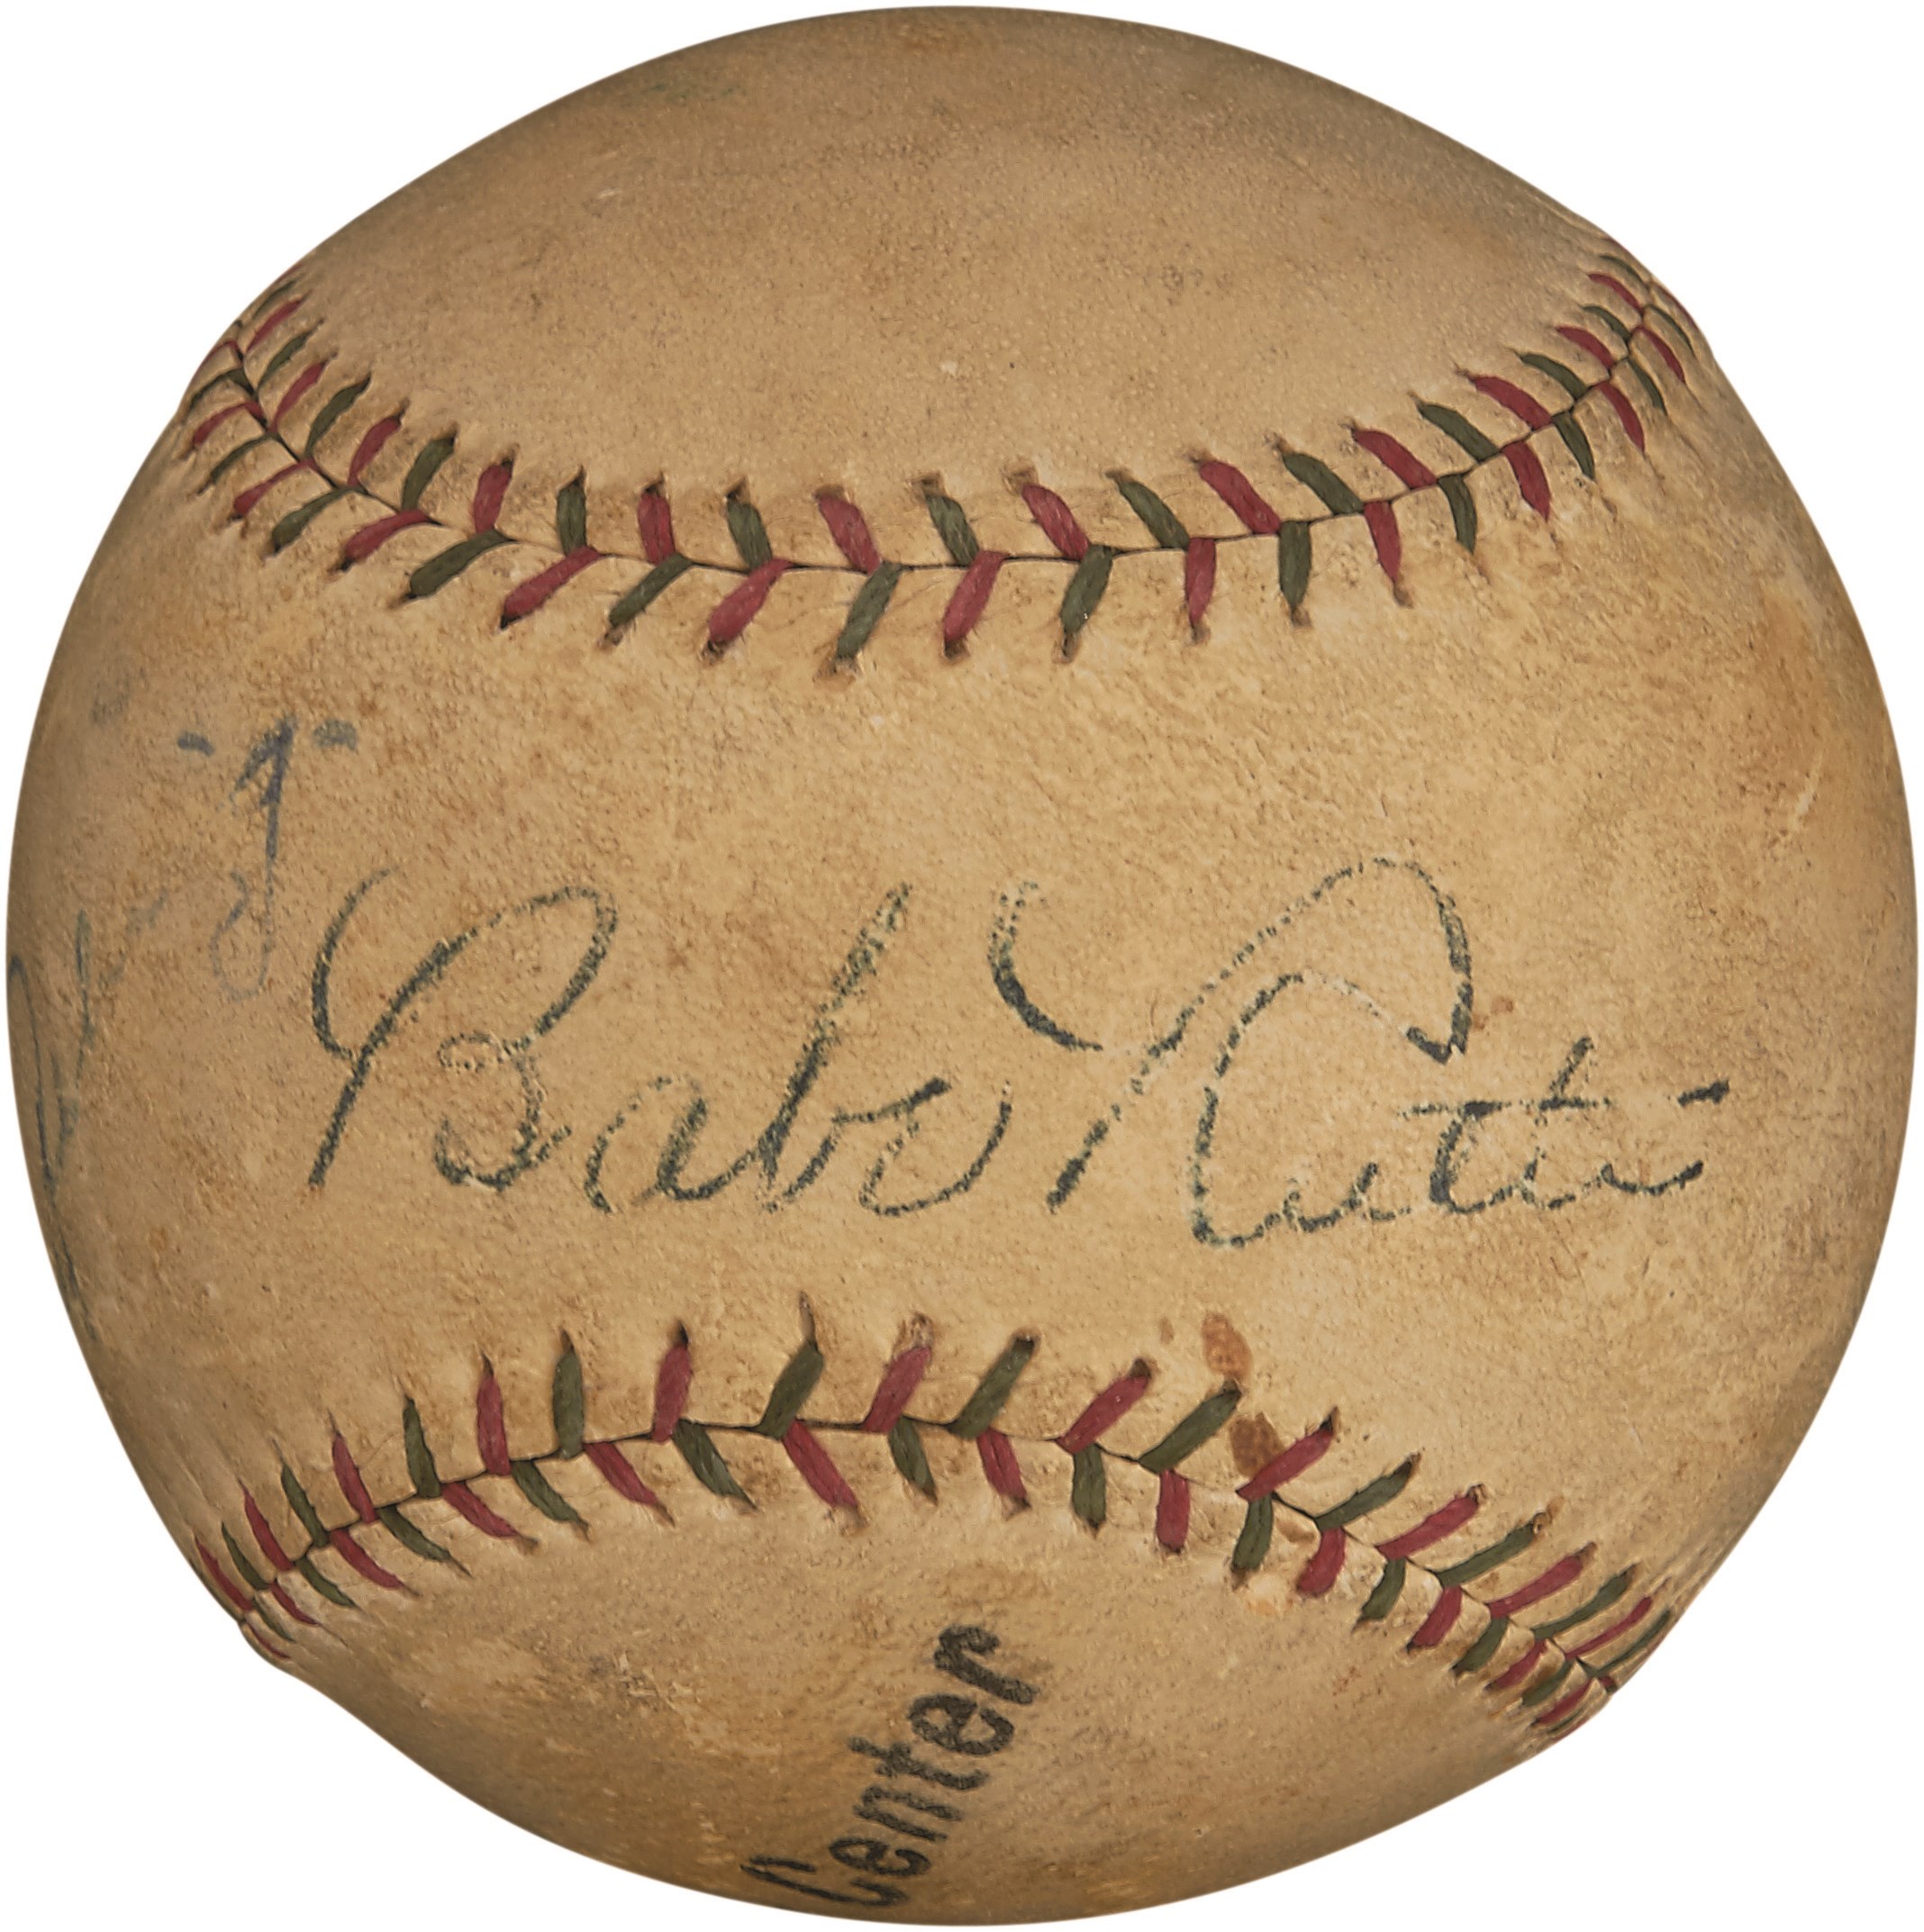 Babe Ruth and Lou Gehrig Signed Baseball (PSA)